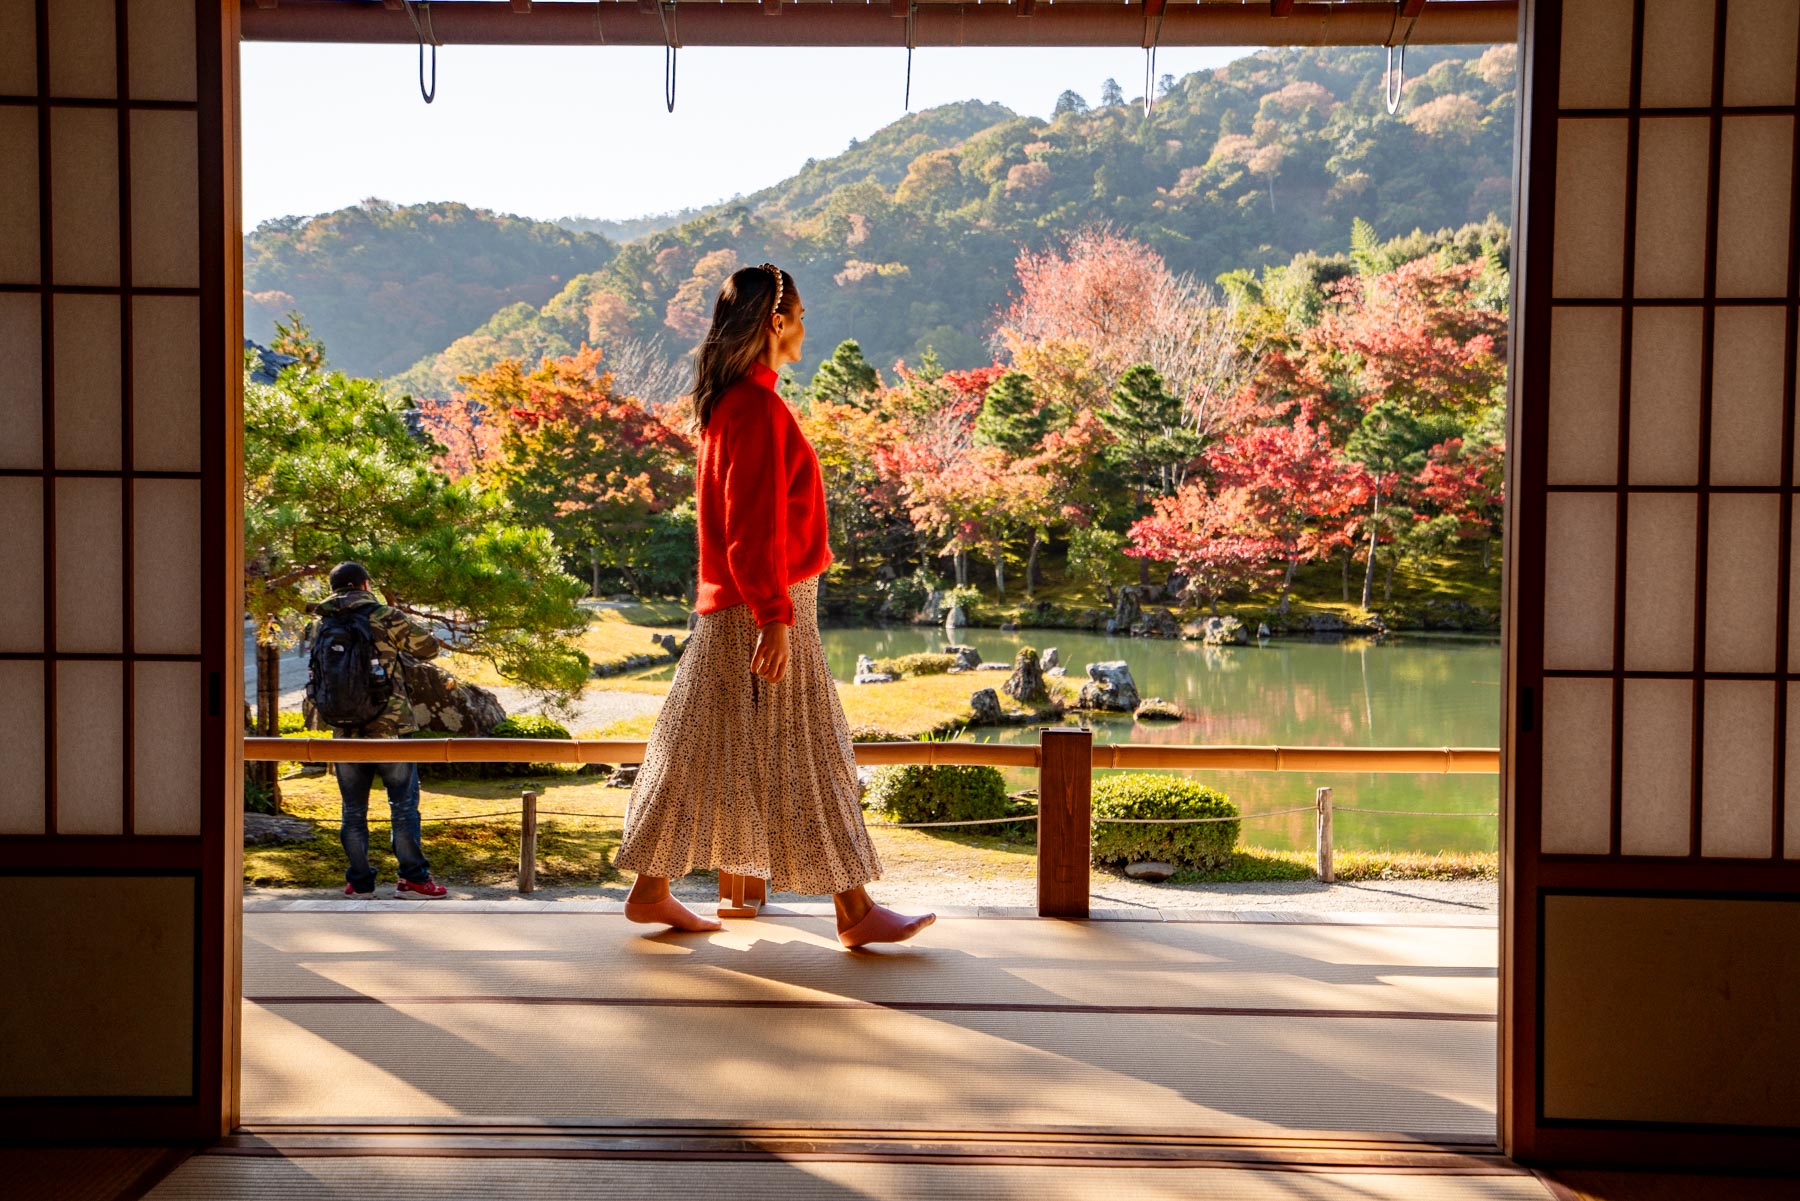 Tenryu-ji Temple in Kyoto
Visiting Kyoto in the fall